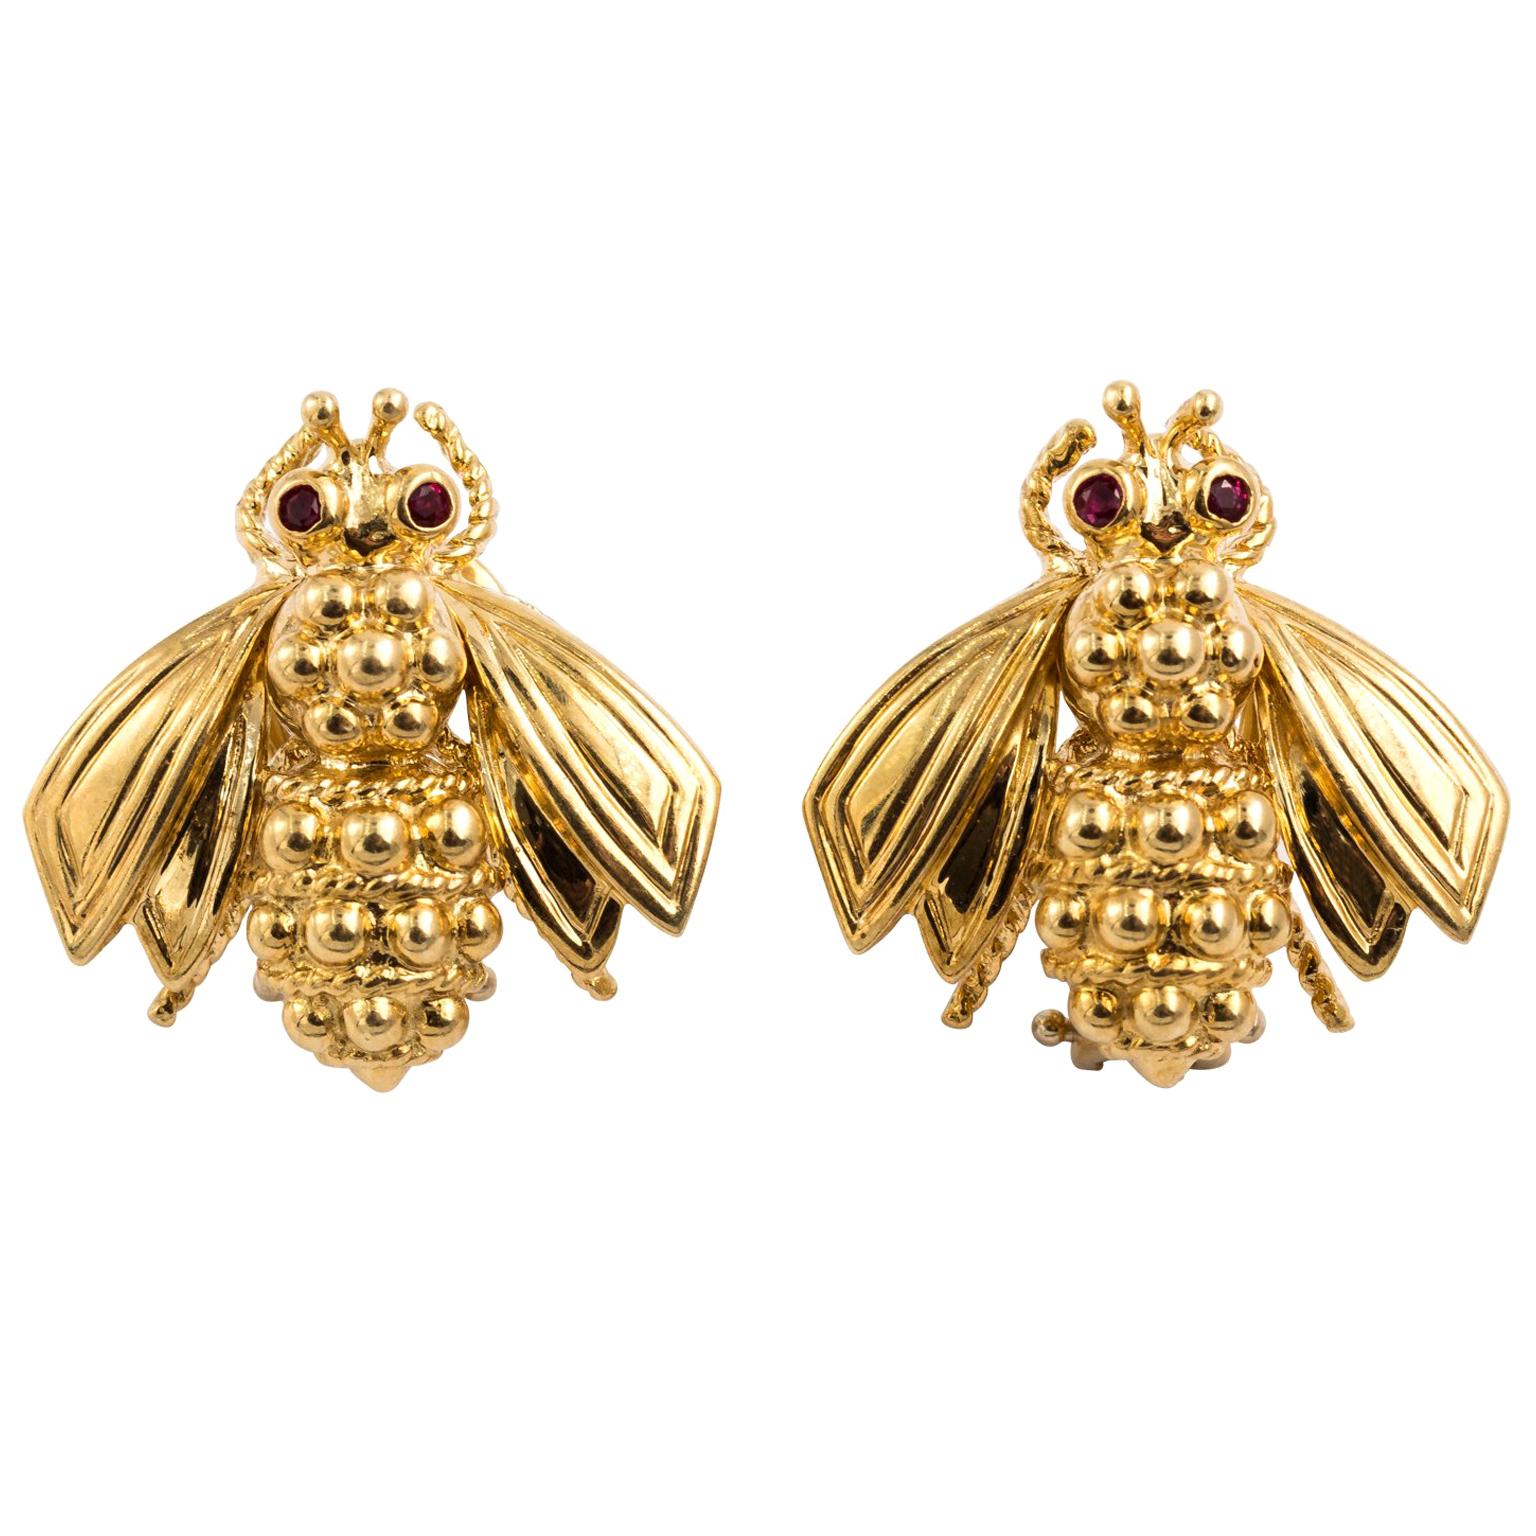 Vintage Tiffany & Co. 18 Karat Gold Sculptural Bee Earrings with Ruby Eyes